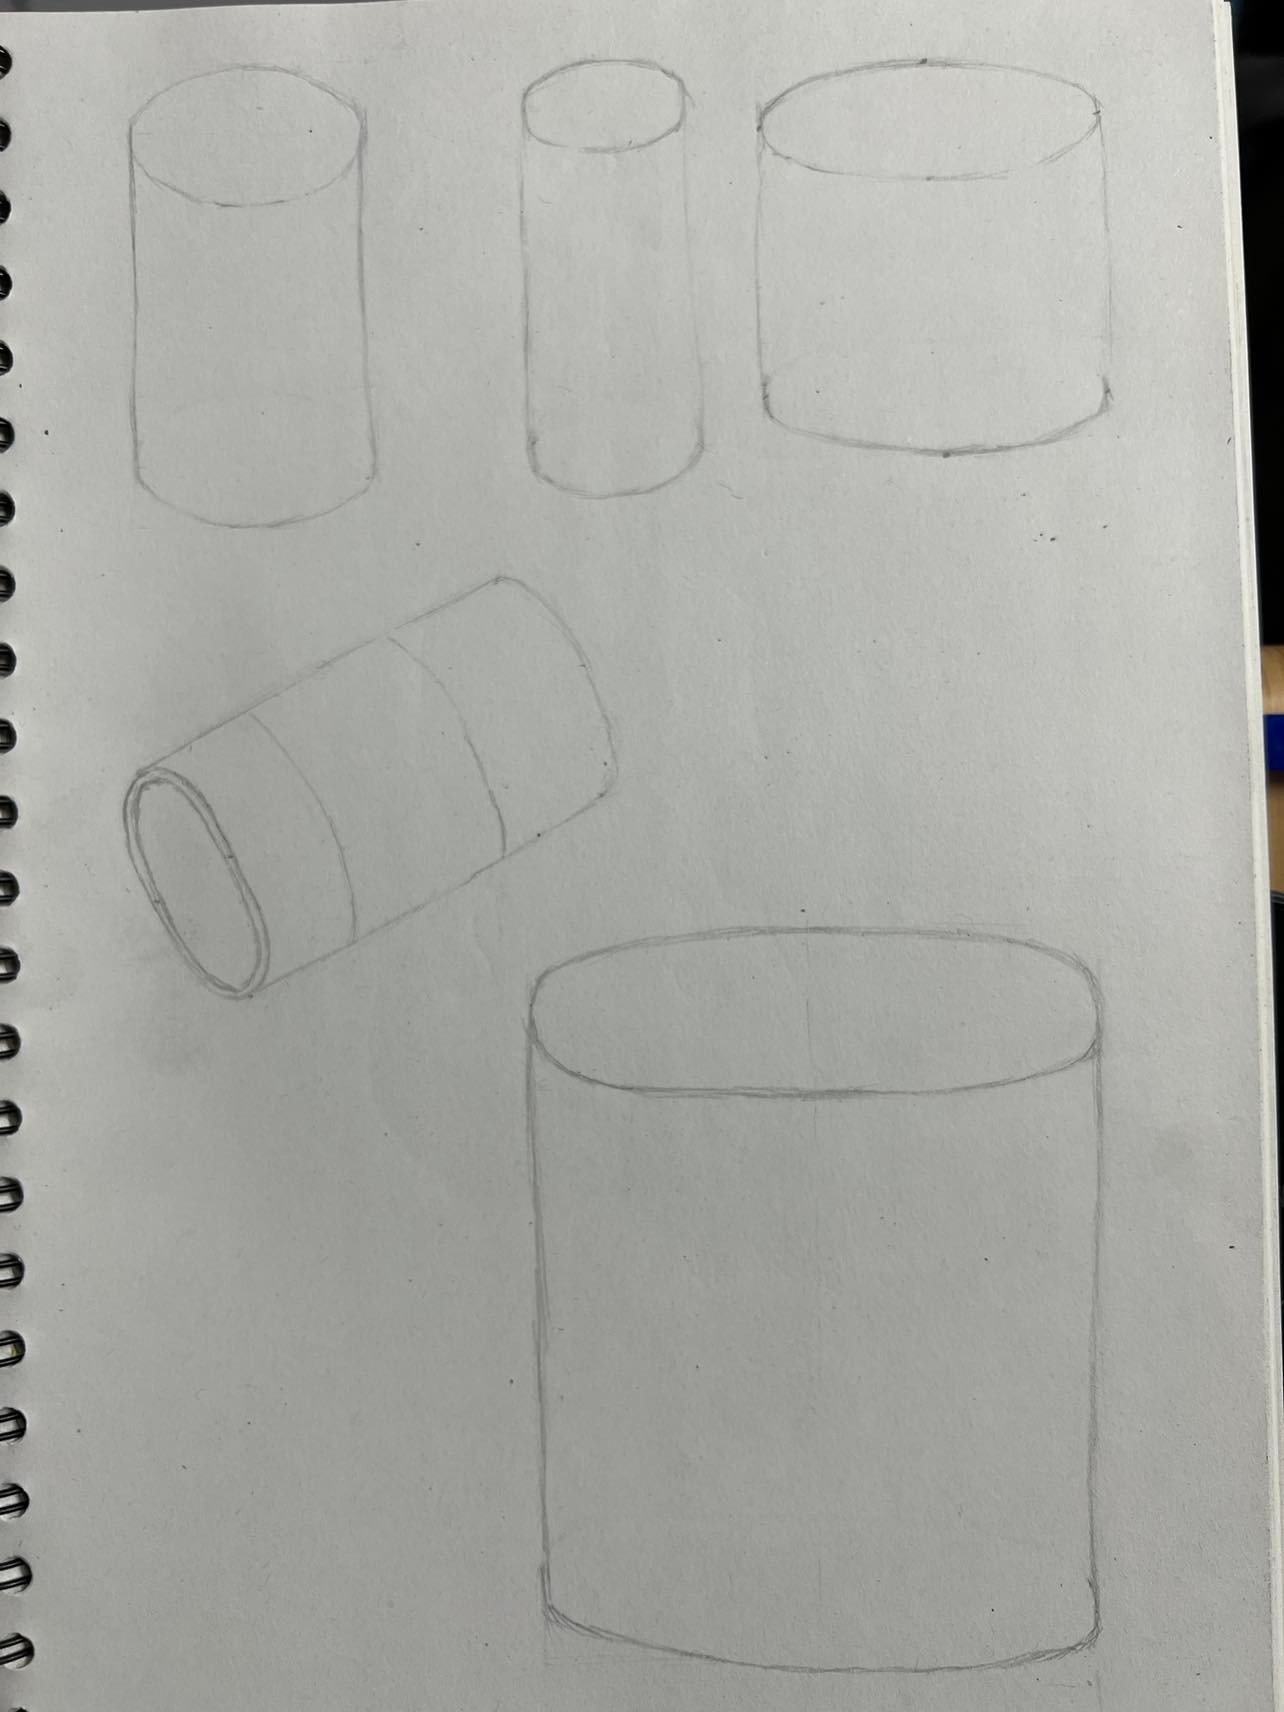 Apprendre à dessiner un vase et des cylindres